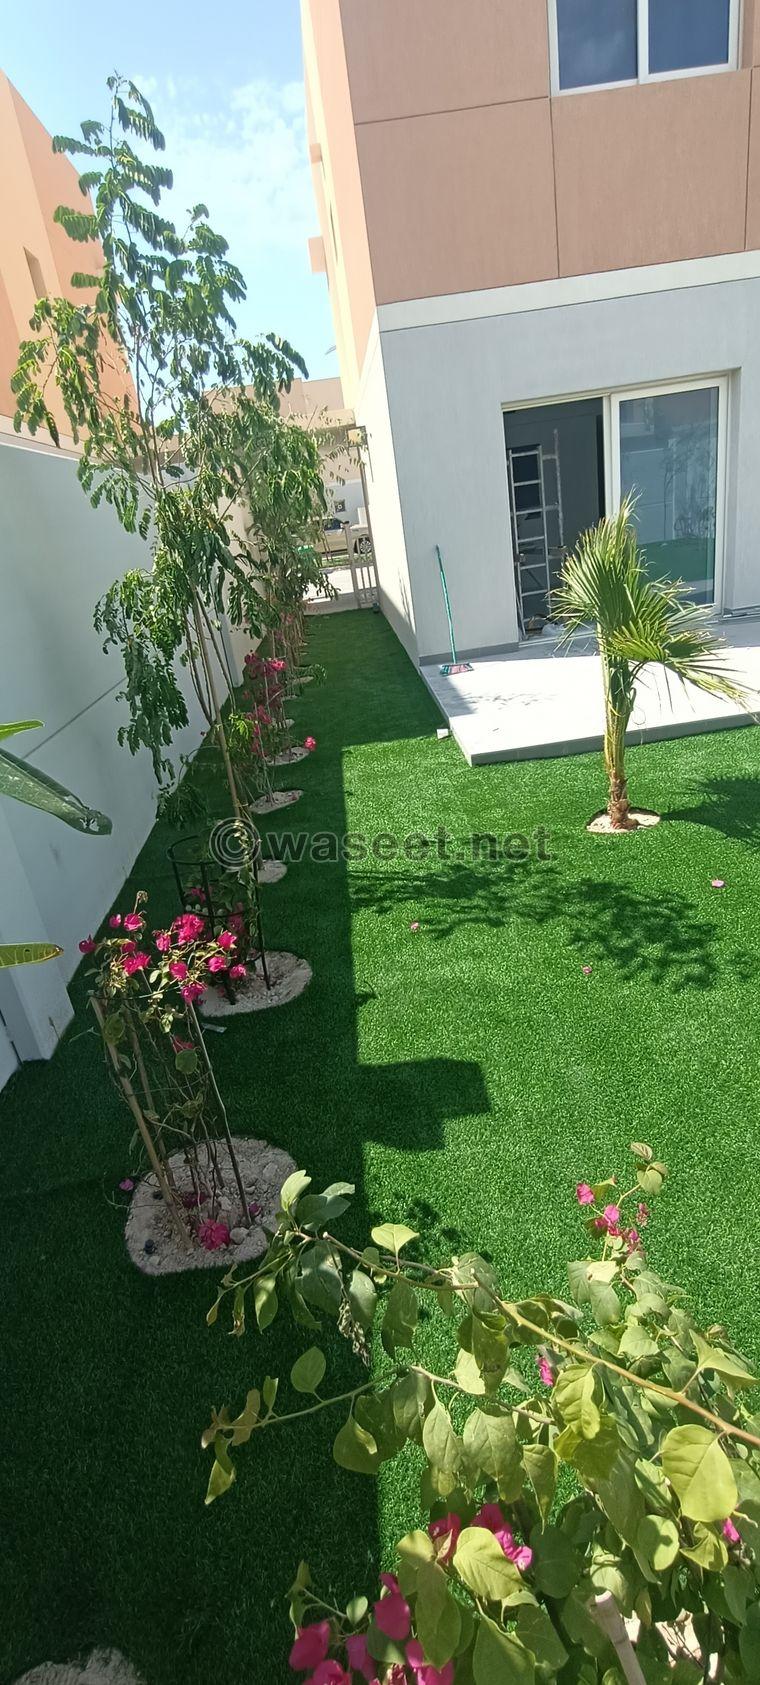 Carpet and artificial grass 0